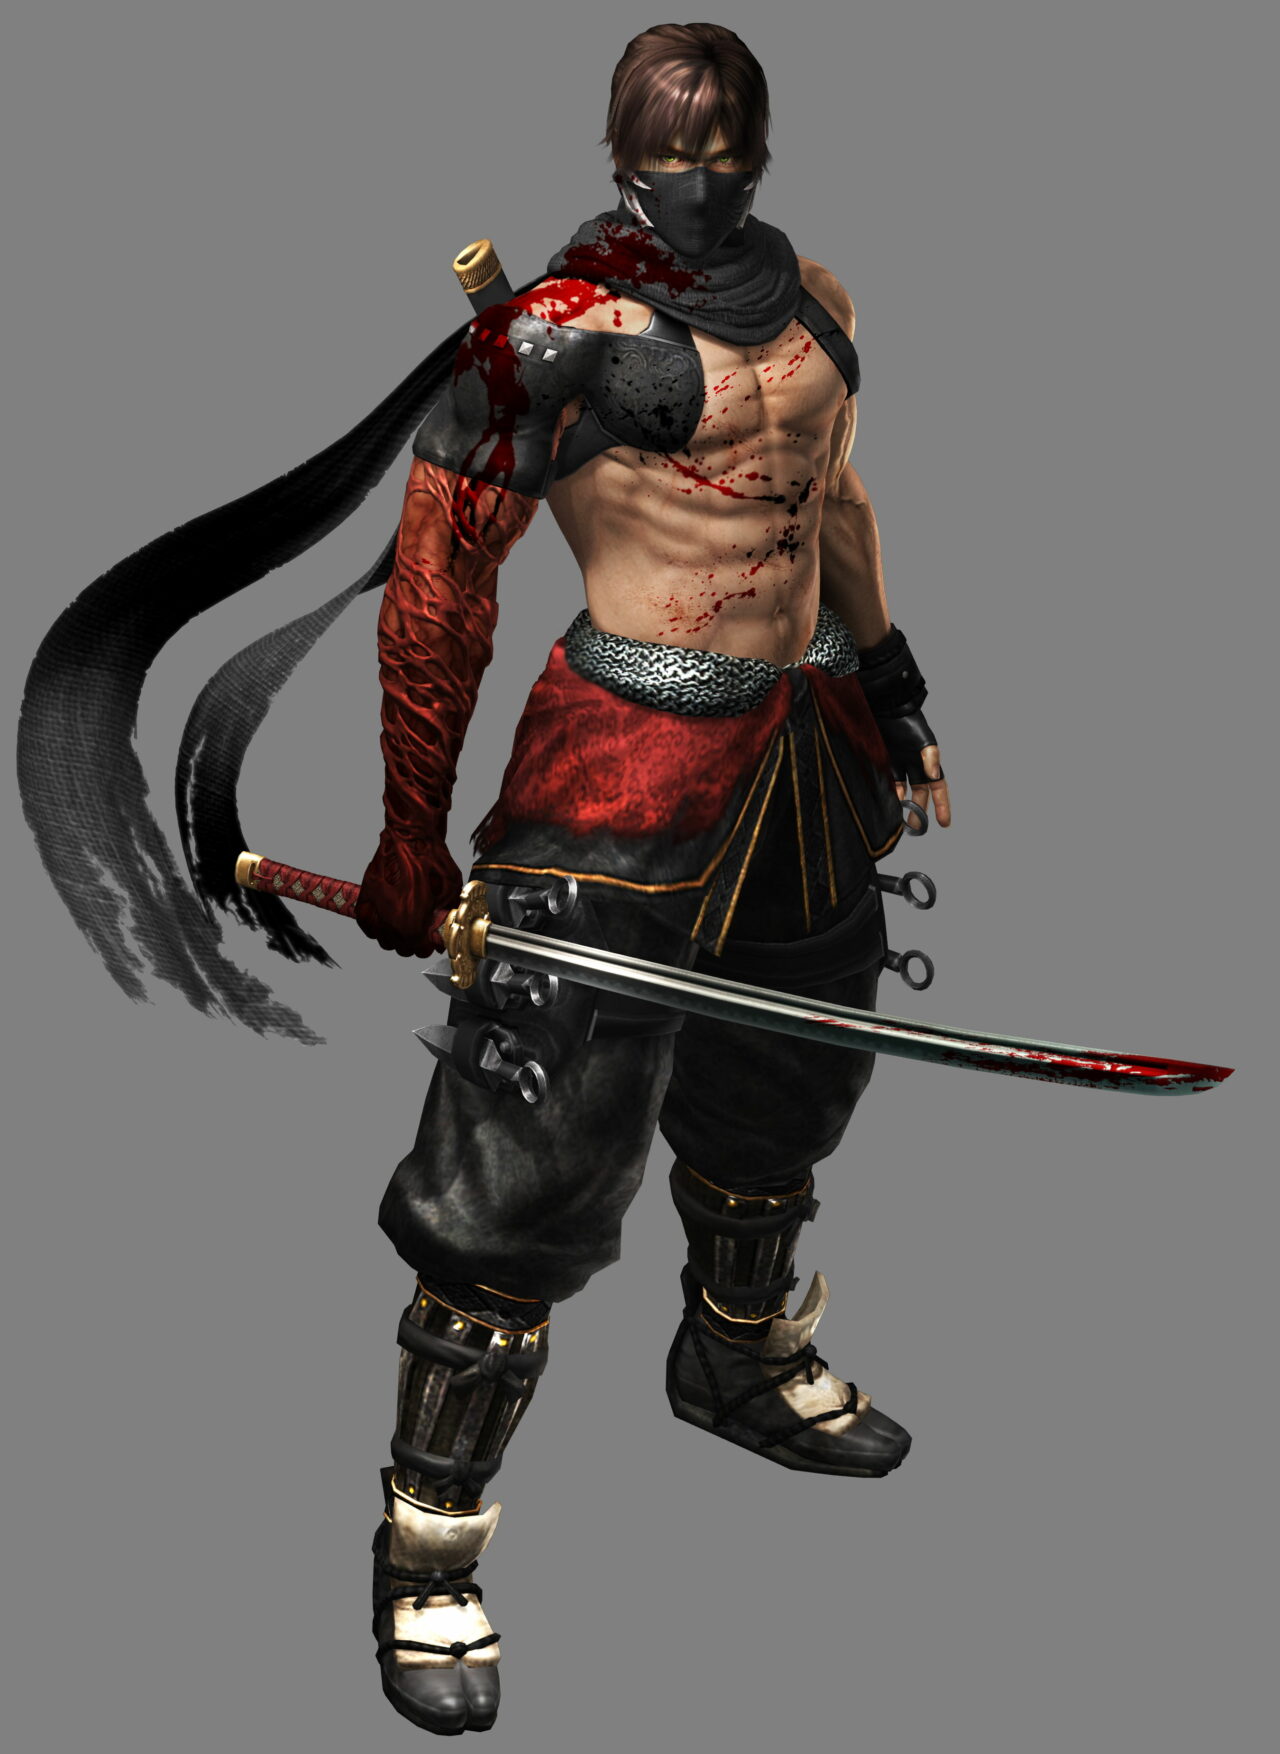 Ninja Gaiden 3: Razor’s Edge PS3, Xbox 360 release date set - Gematsu